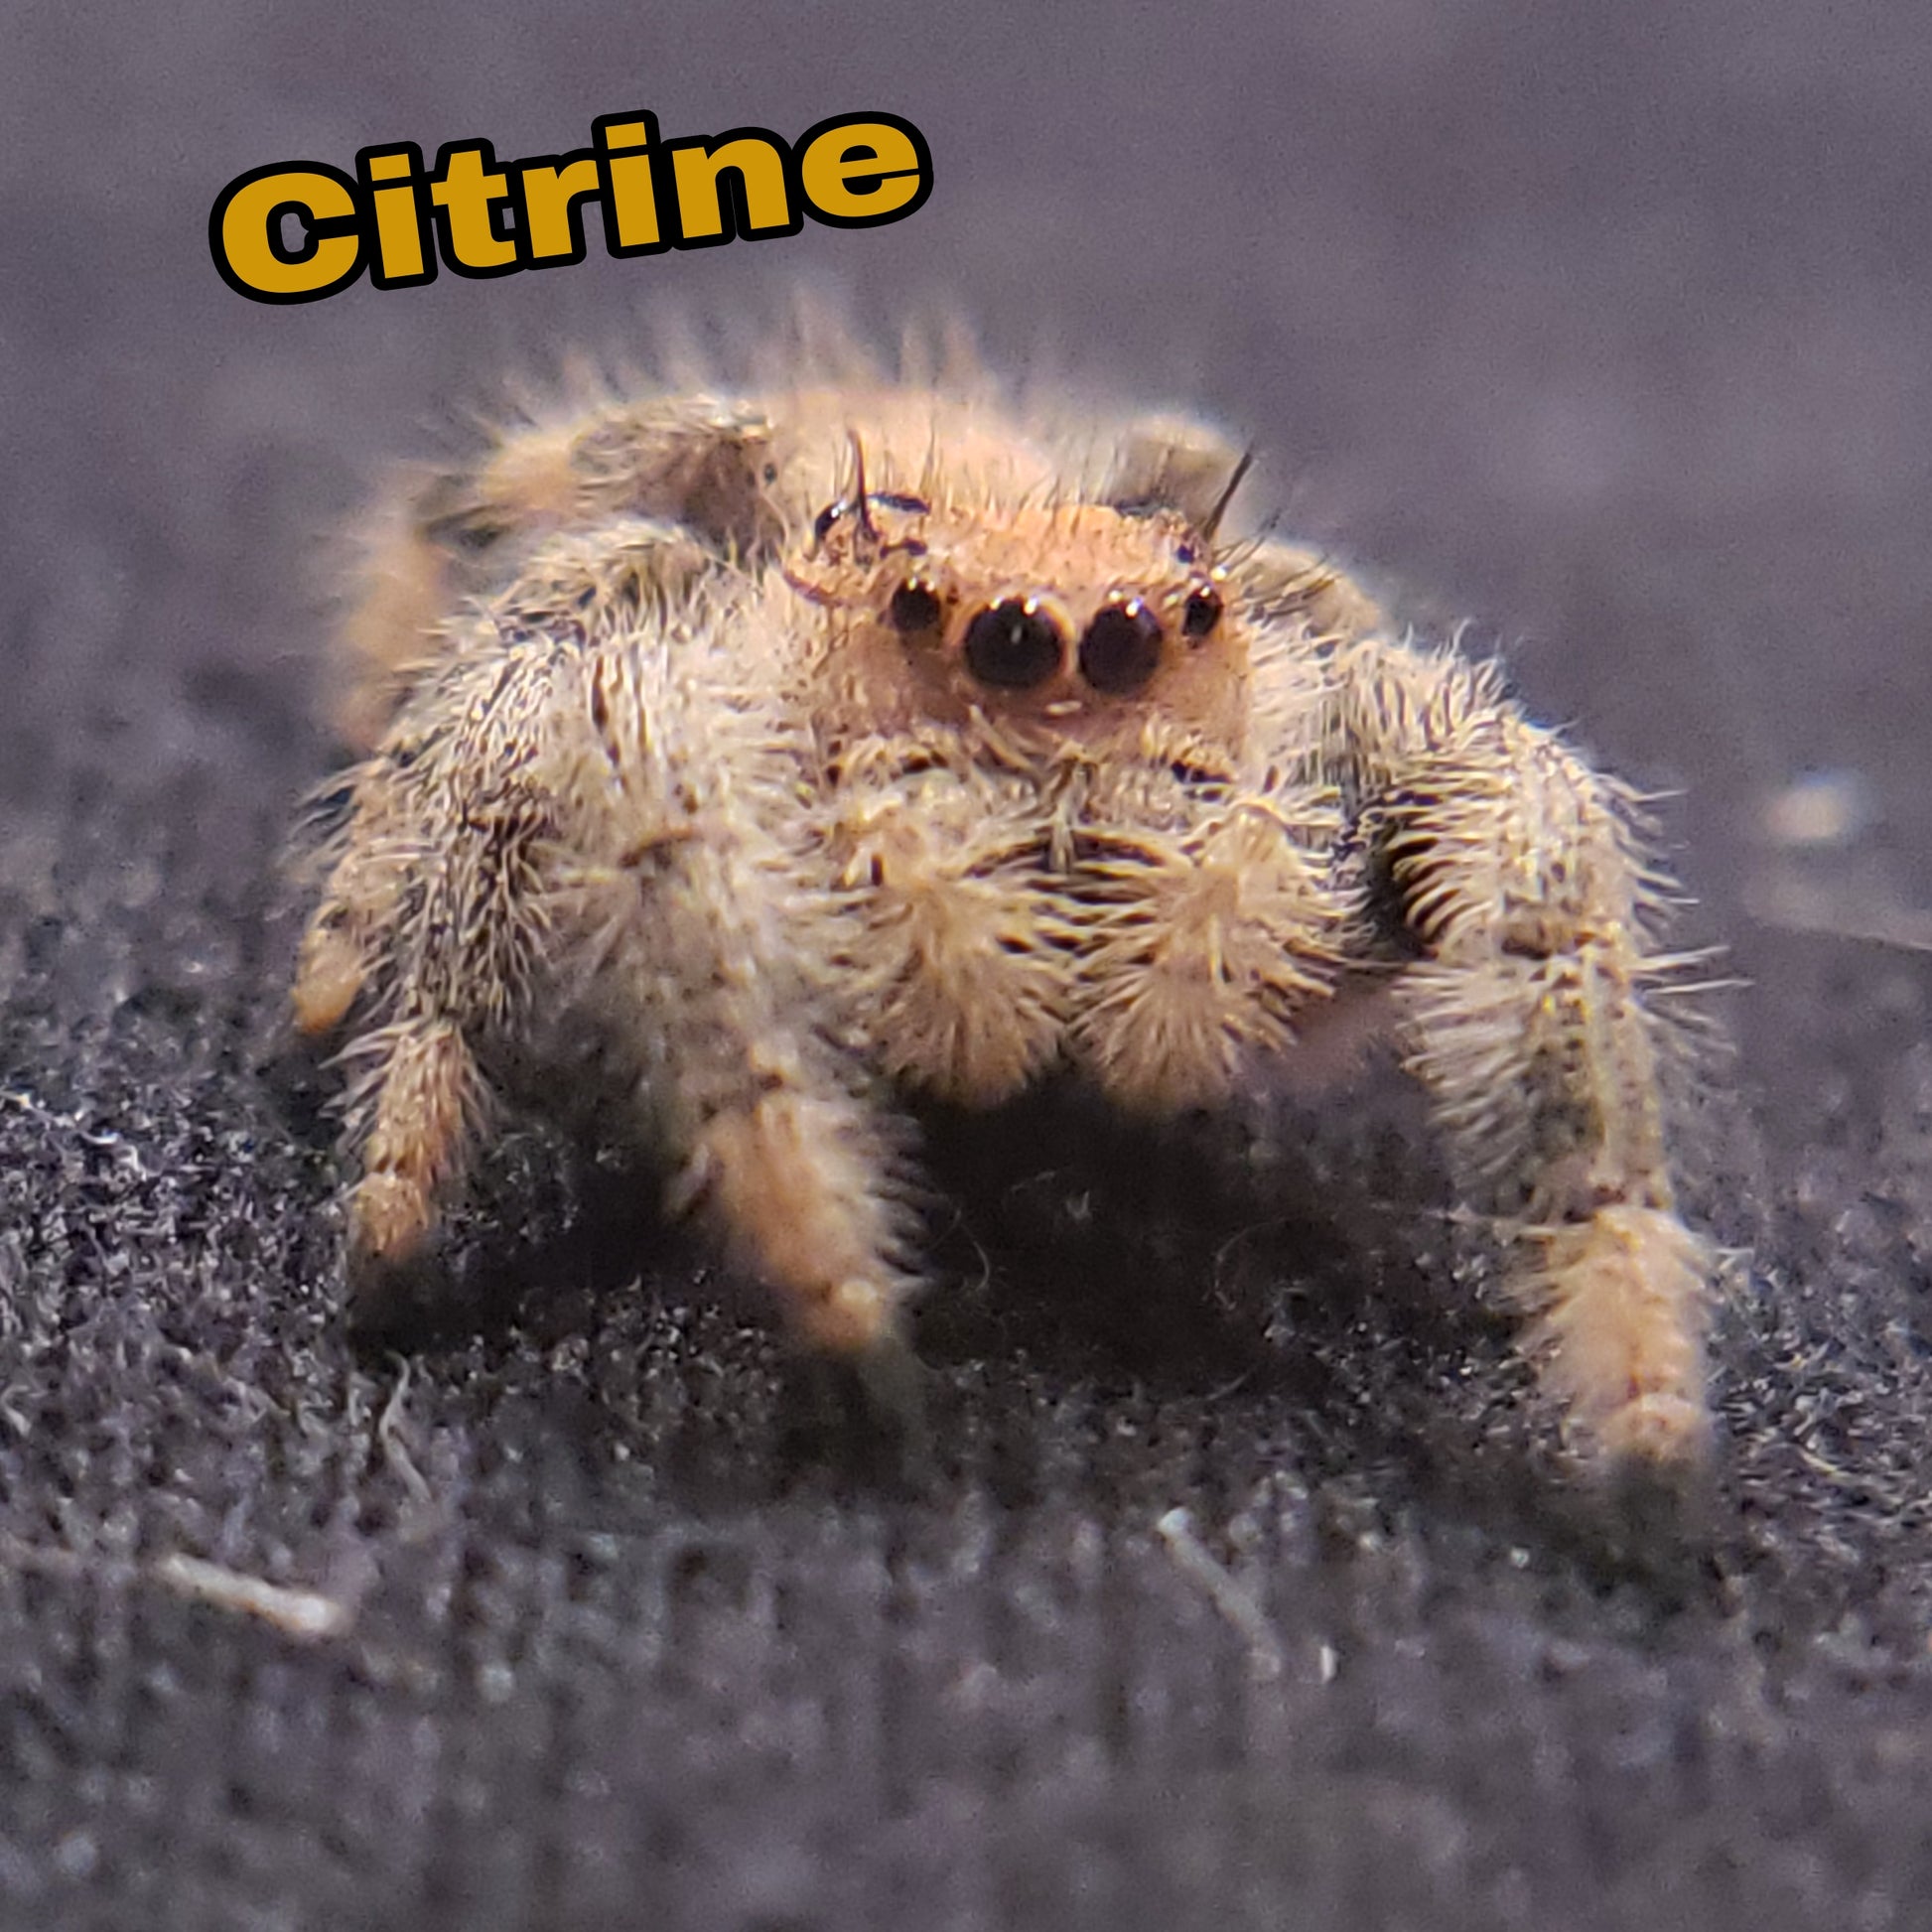 Regal Jumping Spider "Citrine" - Jumping Spiders For Sale - Spiders Source - #1 Regal Jumping Spider Store